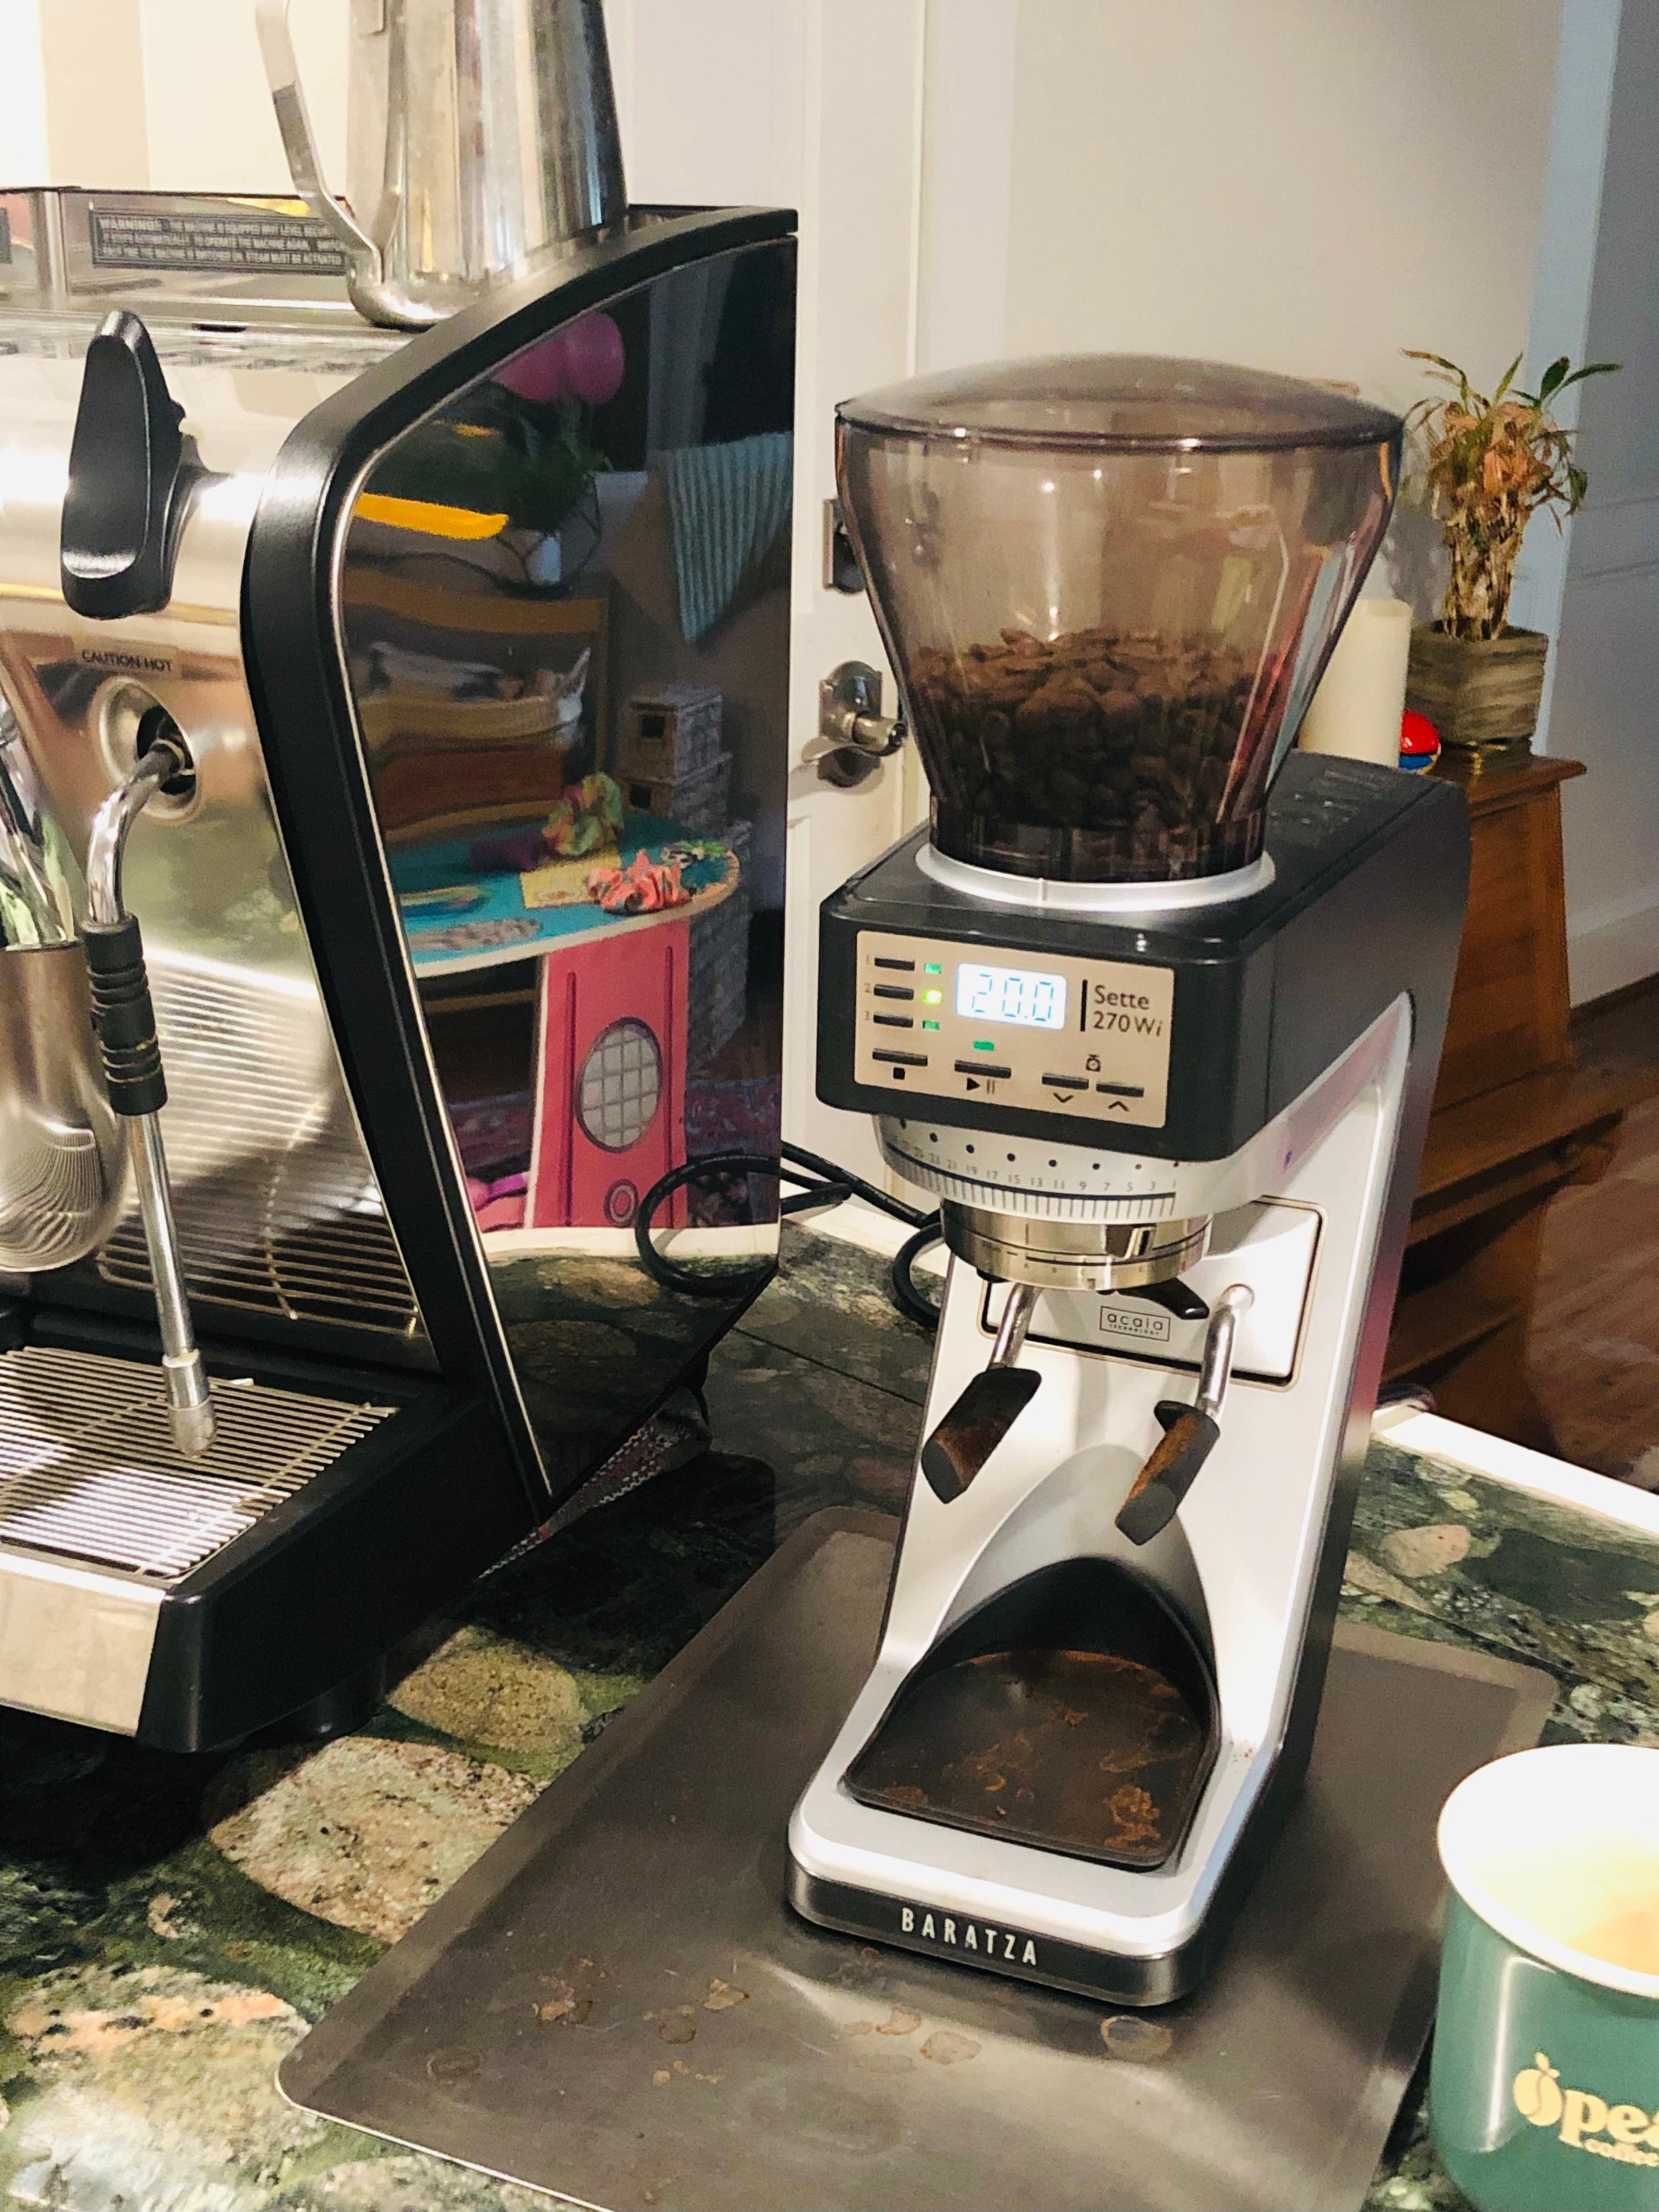 The 5 best burr coffee grinders of 2022